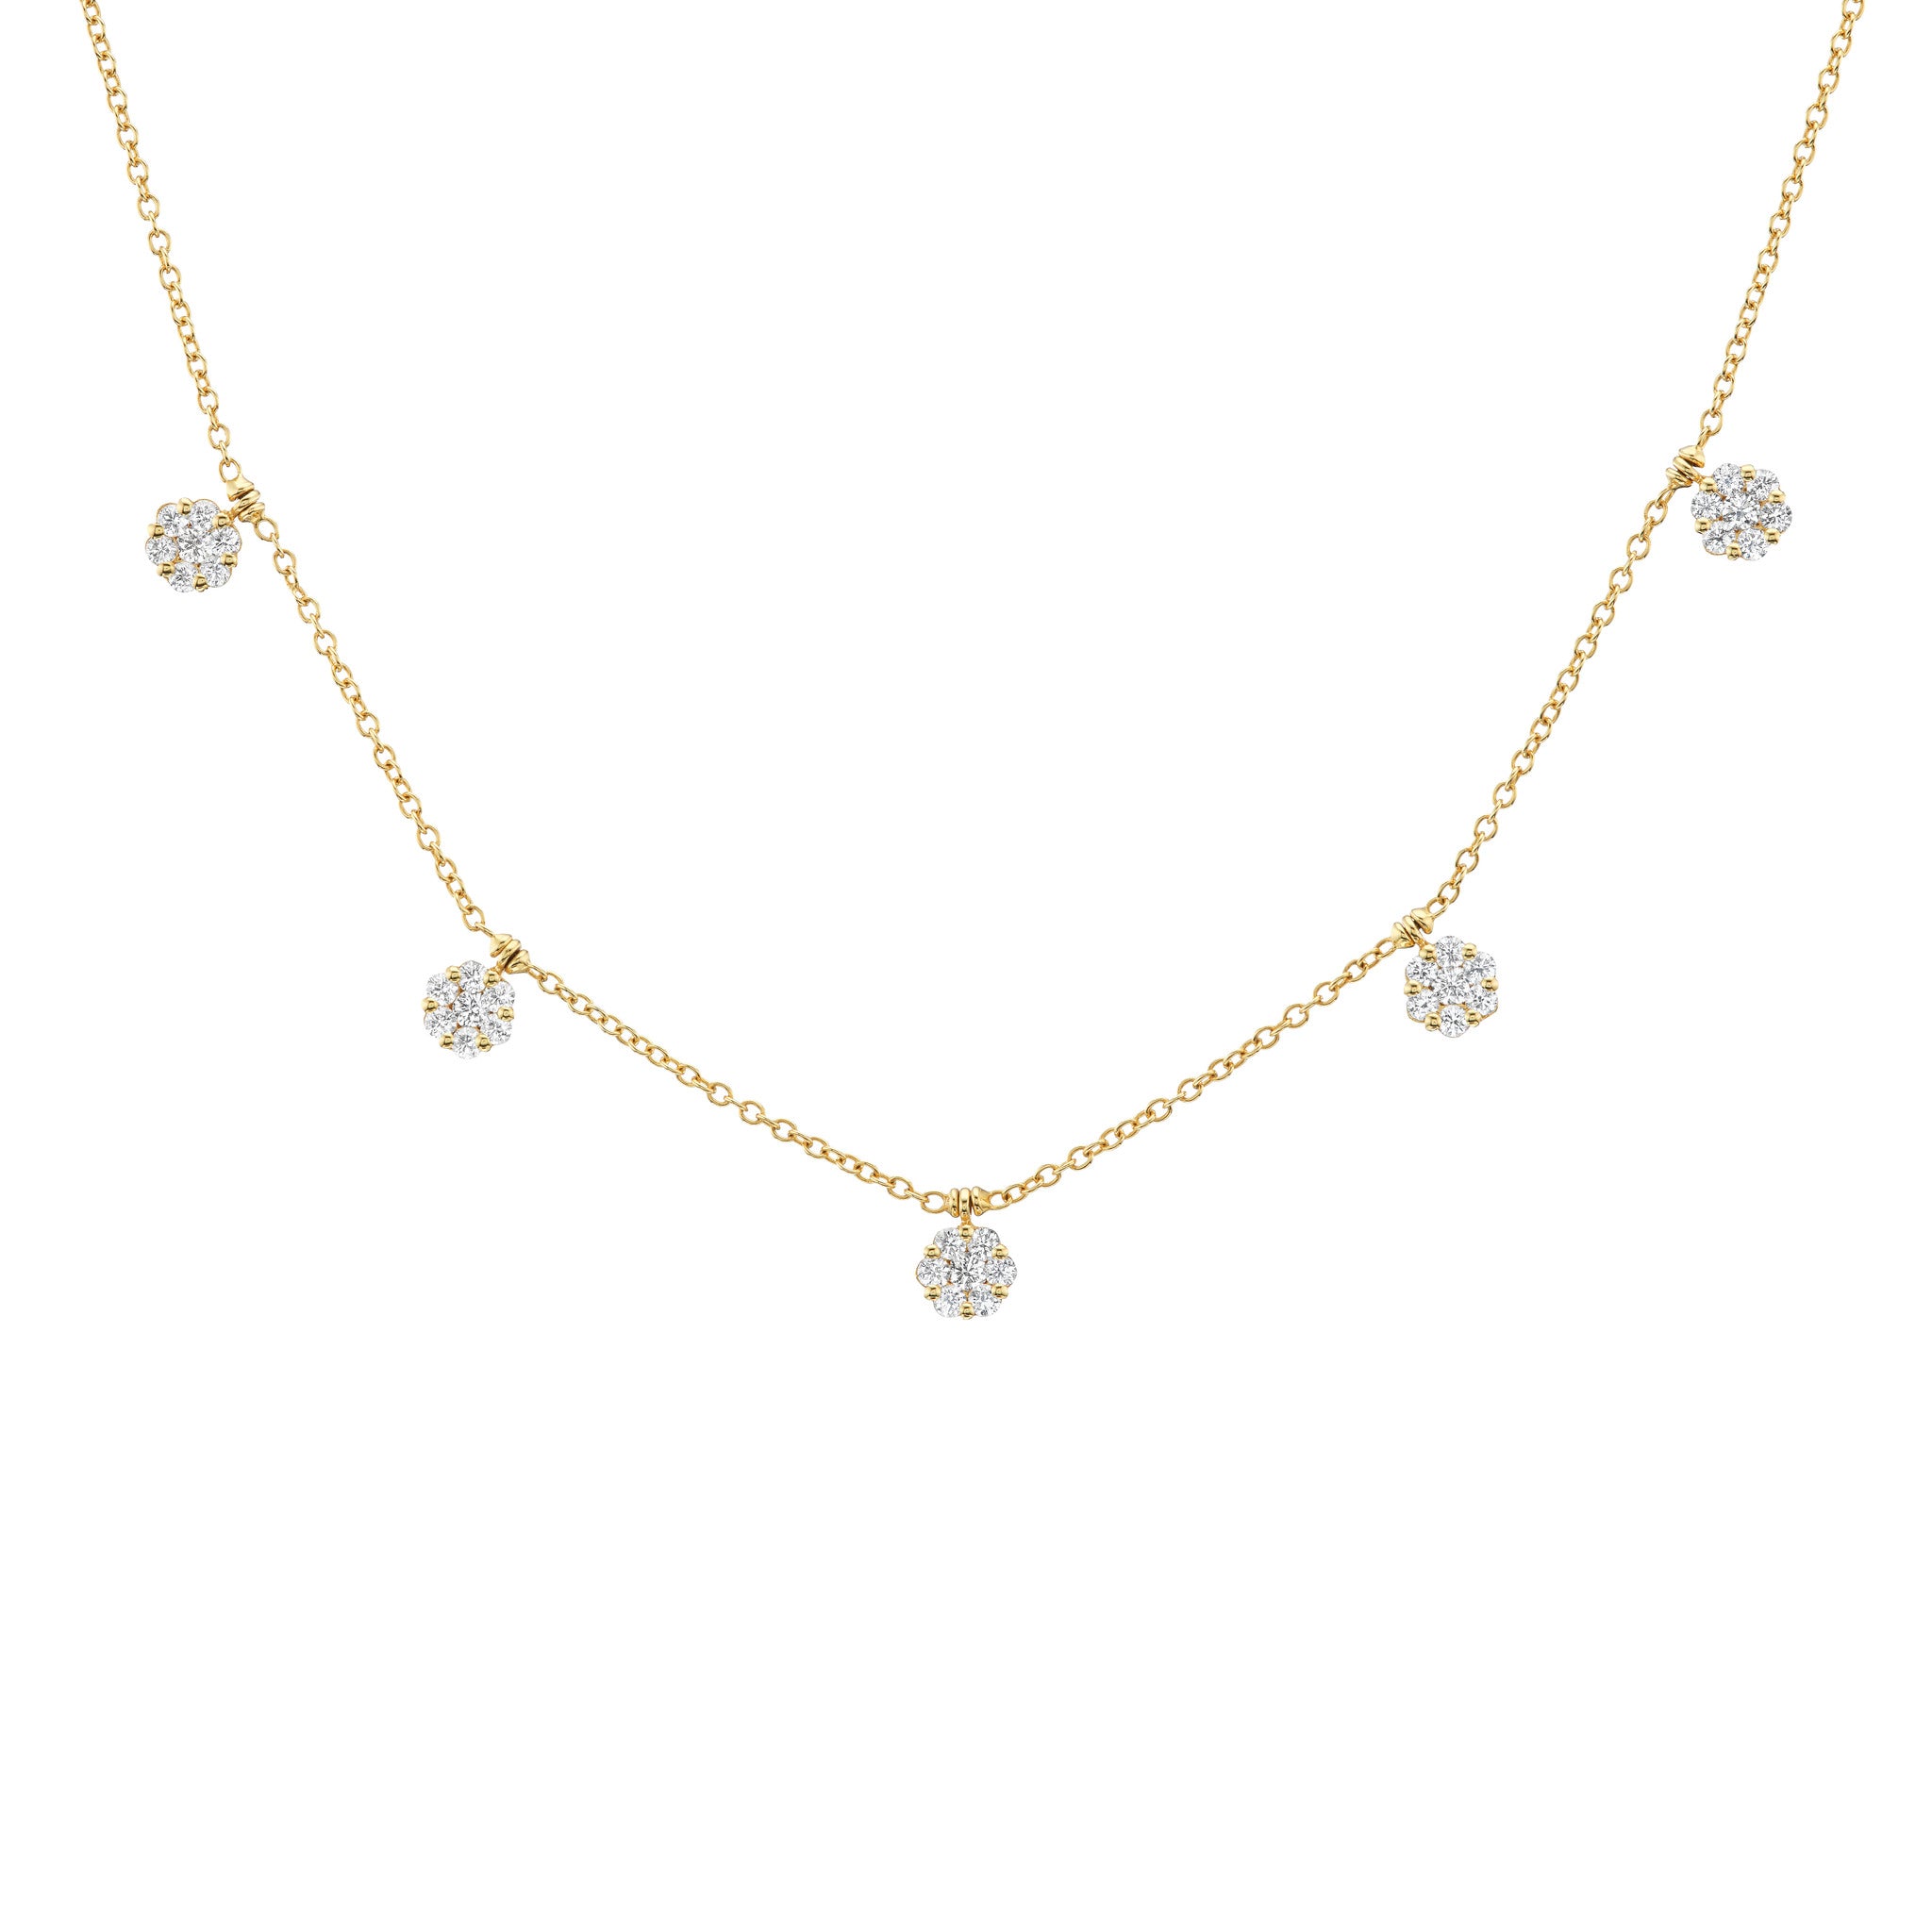 The Fleurette Diamond Necklace